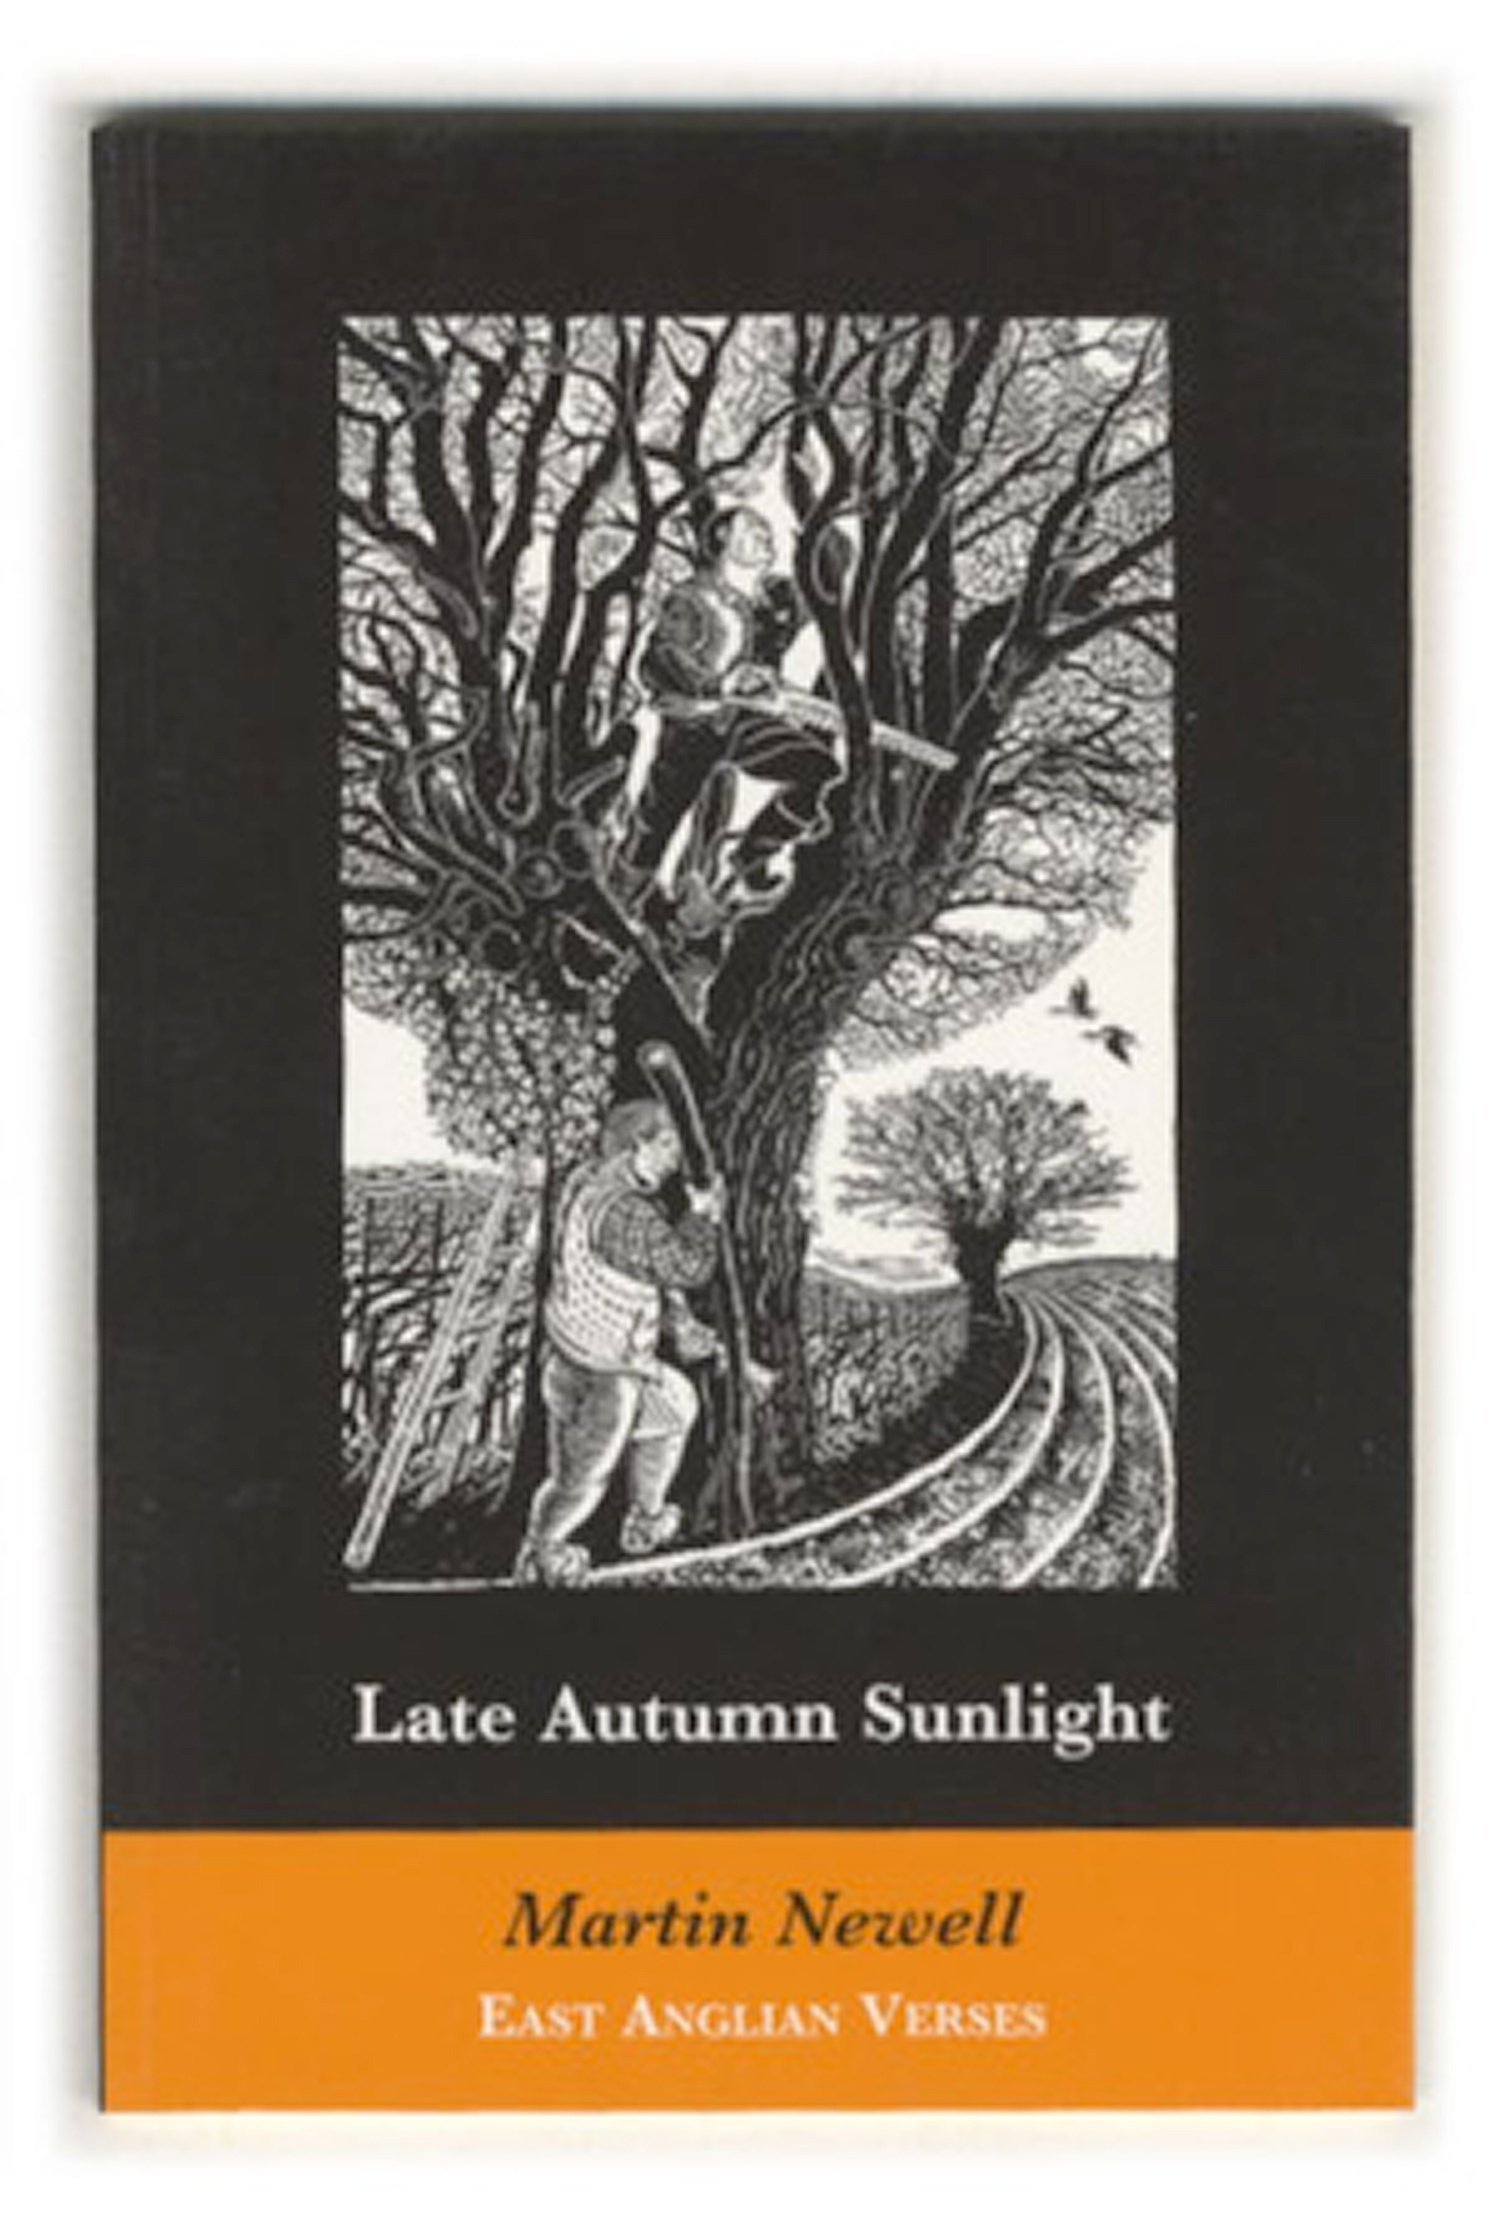 Late Autumn Sunlight by Martin Newell